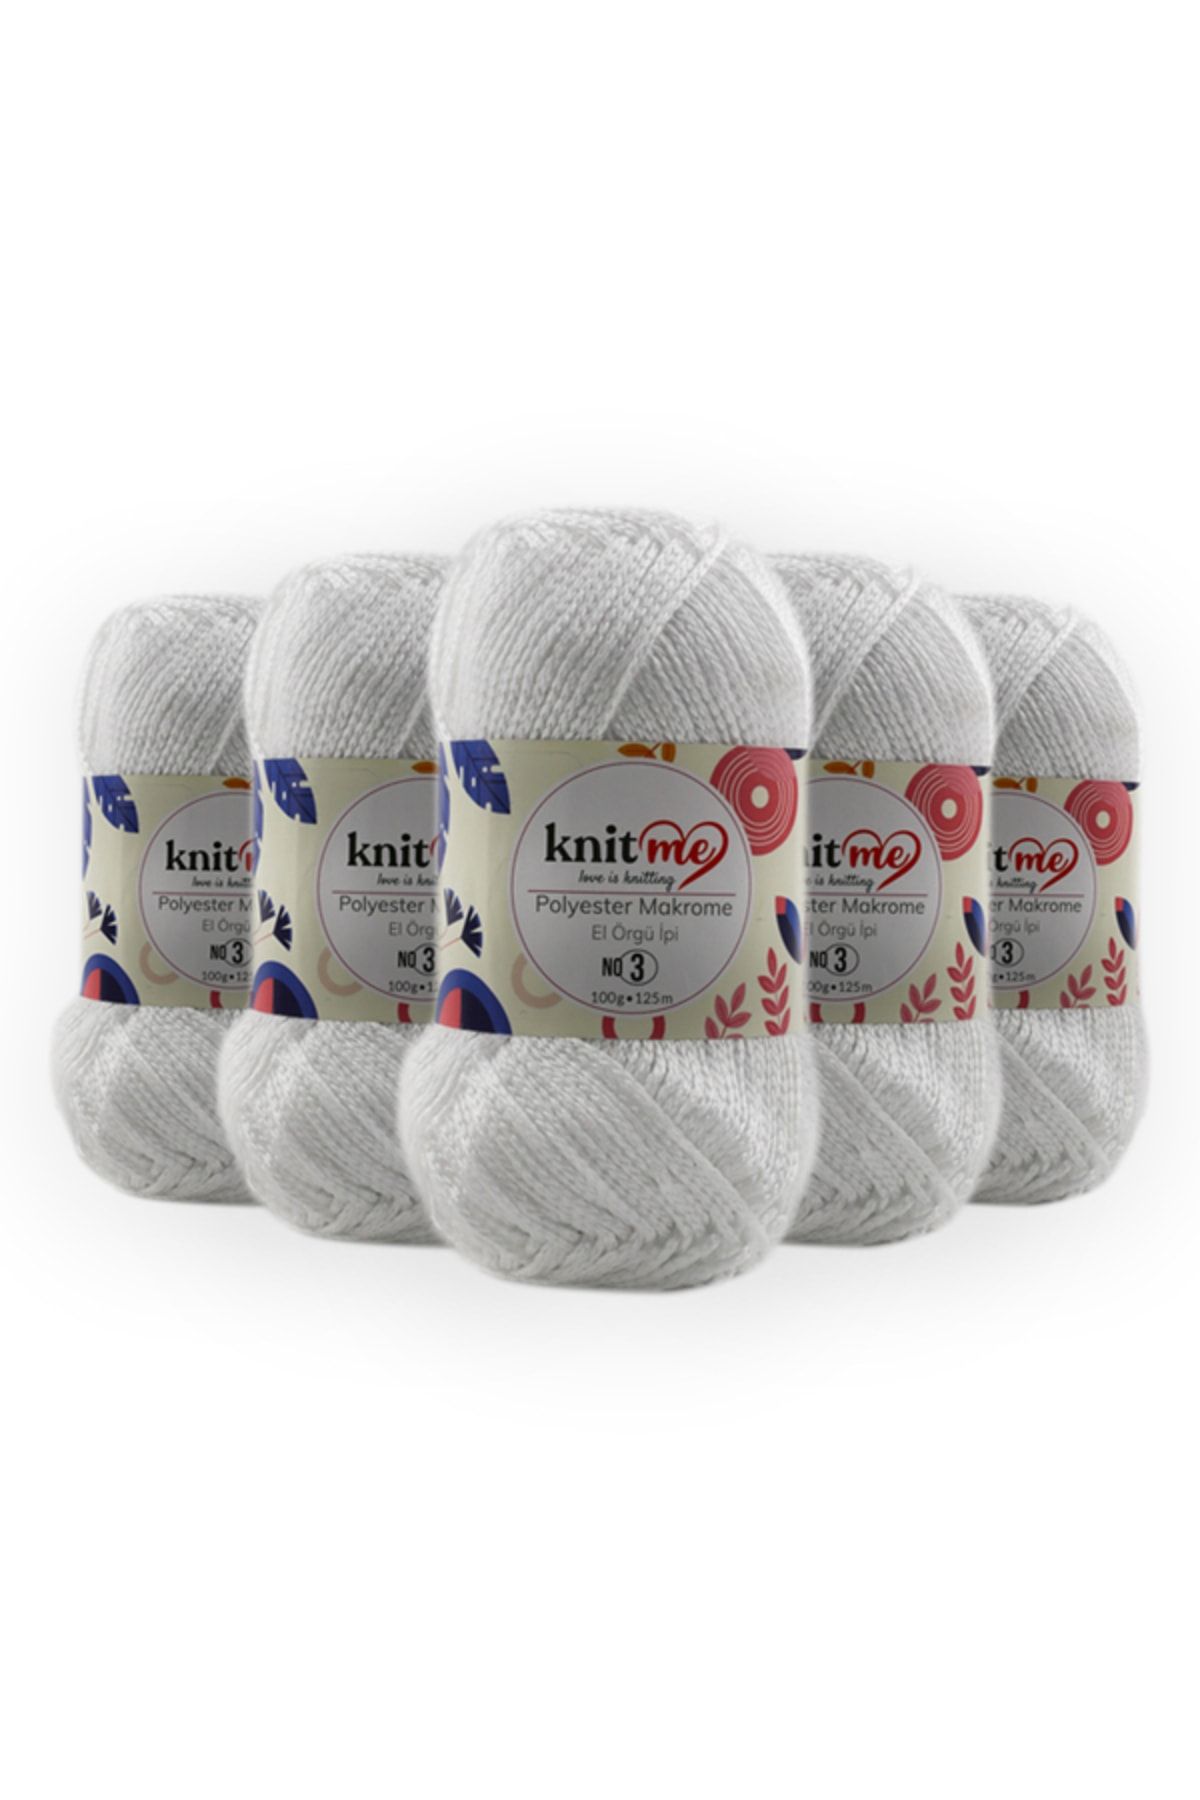 knitme Polyester Makrome 100 Gr 5'li Paket El Örgü Ipi Taka Yarn (801)